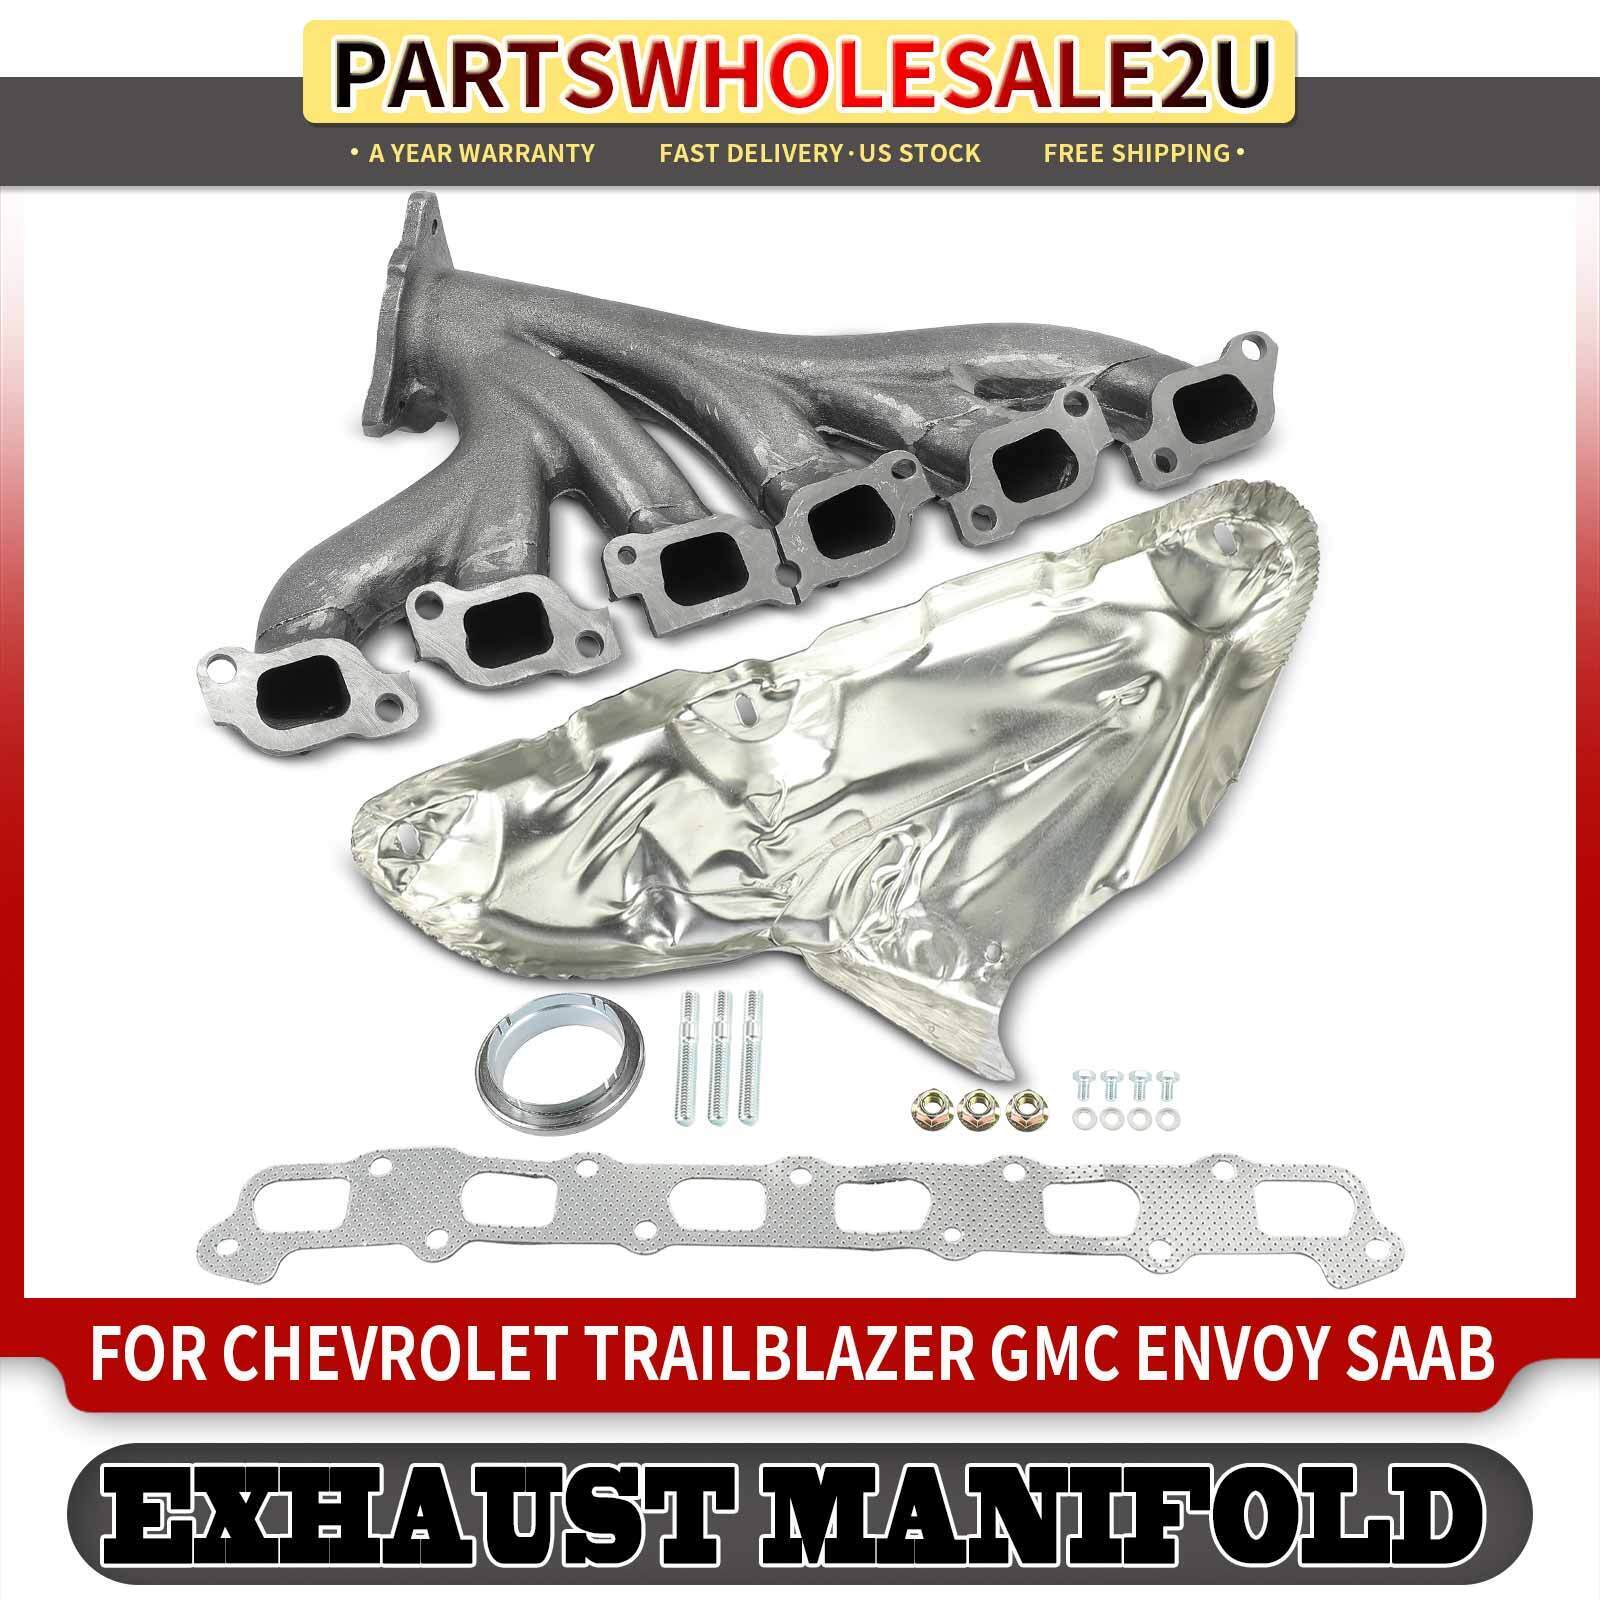 Exhaust Manifold with Gasket for Chevrolet Trailblazer GMC Envoy Isuzu Ascender